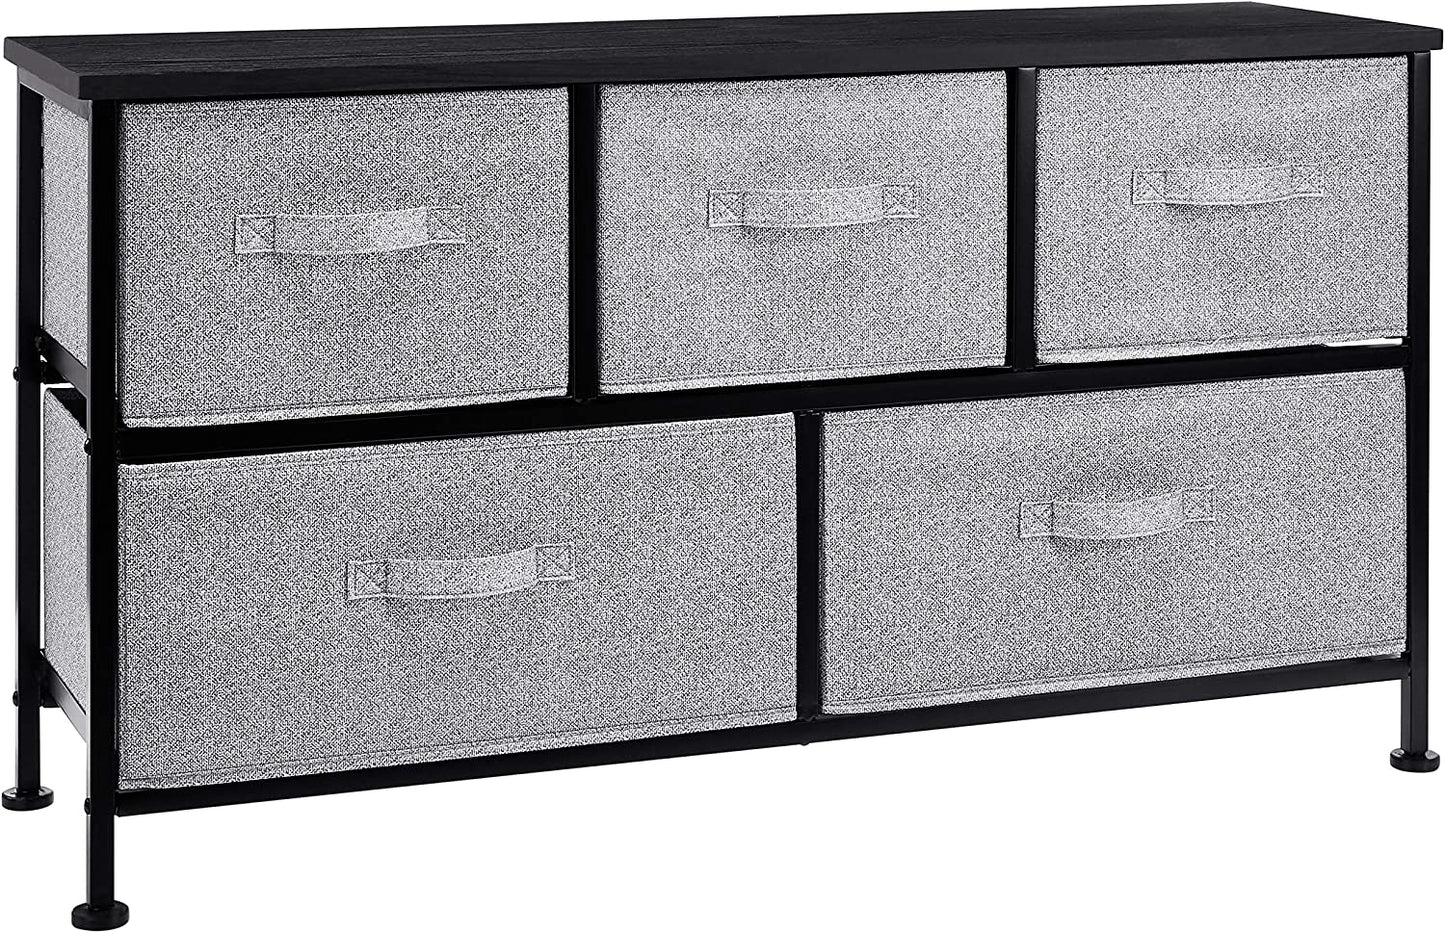 Extra Wide Fabric 5-Drawer Storage Organizer Unit for Closet, Black